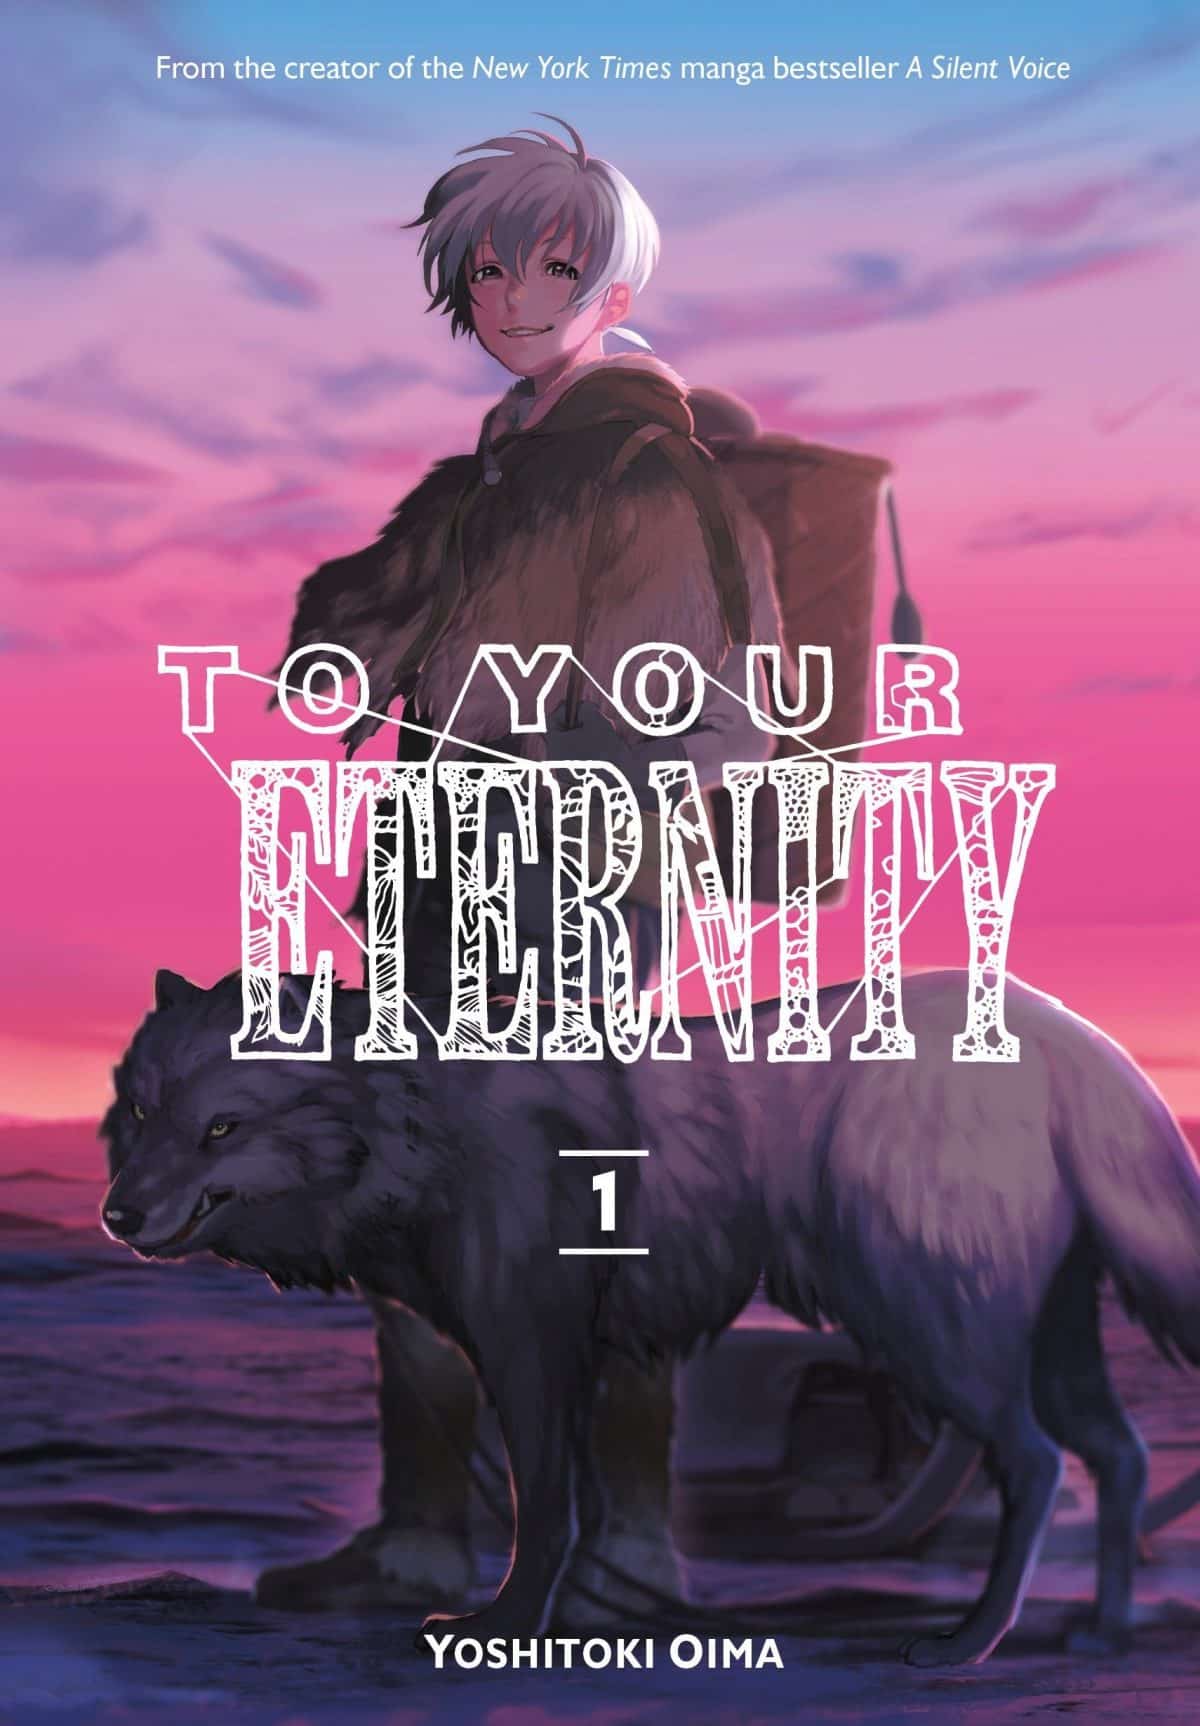 Star Comics presenta “To your eternity” il nuovo manga di Yoshitoki Oima